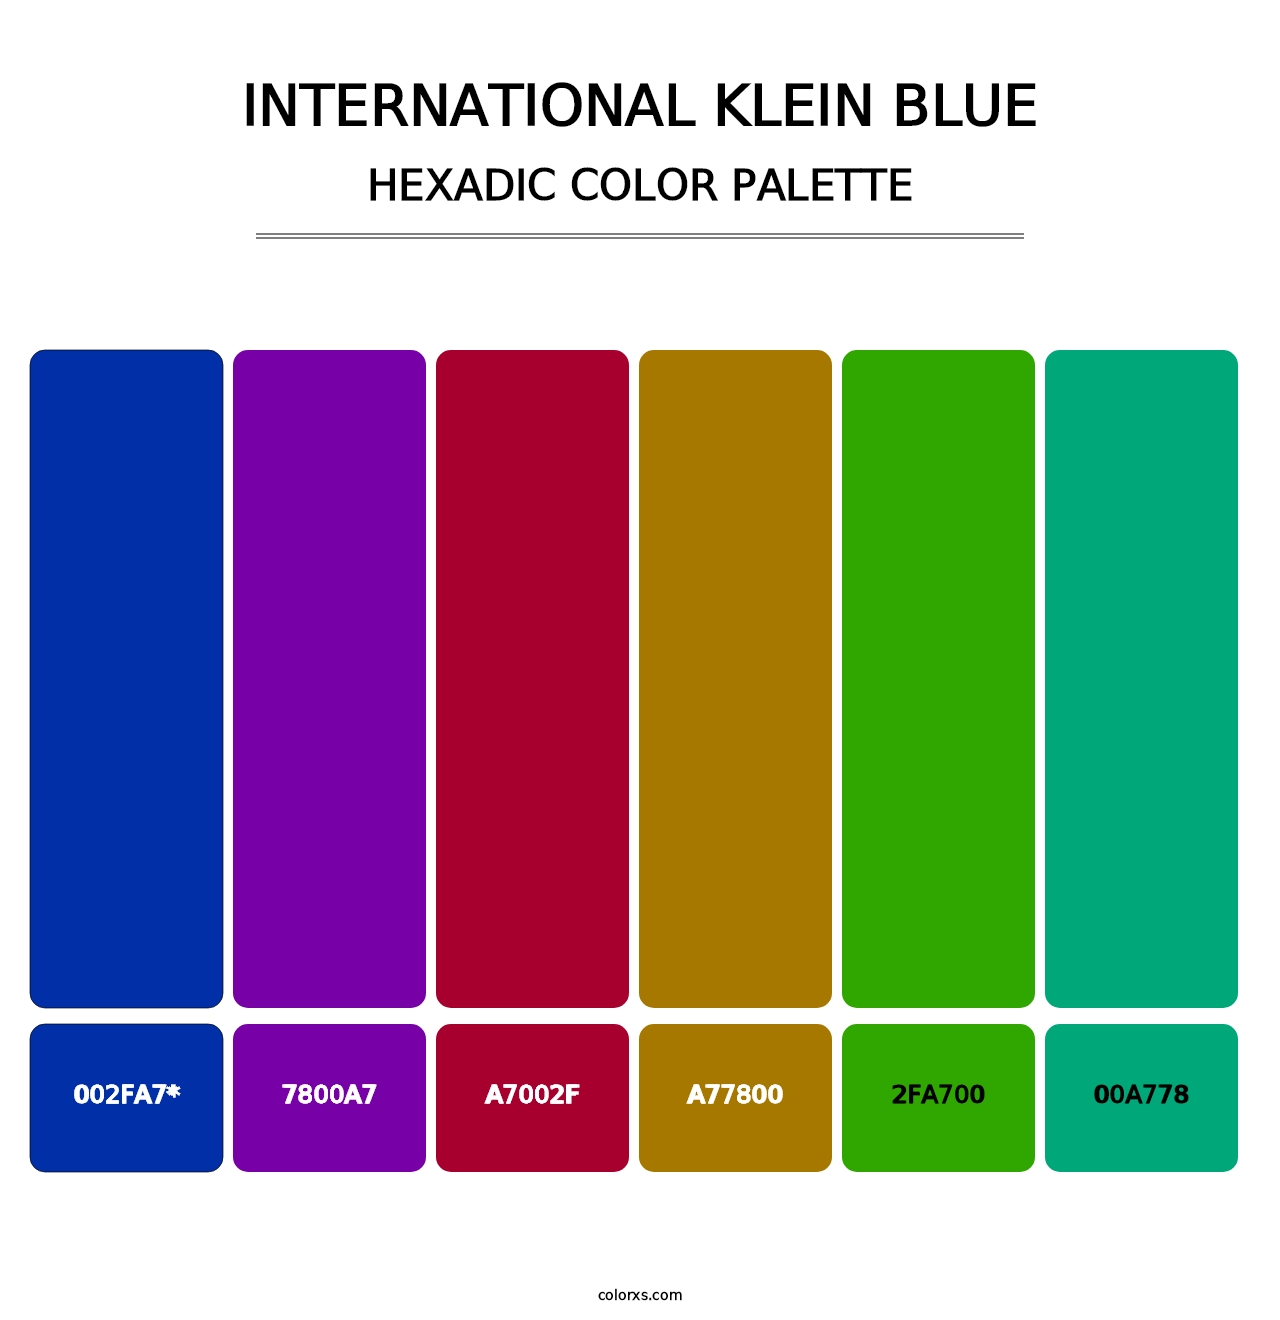 International Klein Blue - Hexadic Color Palette